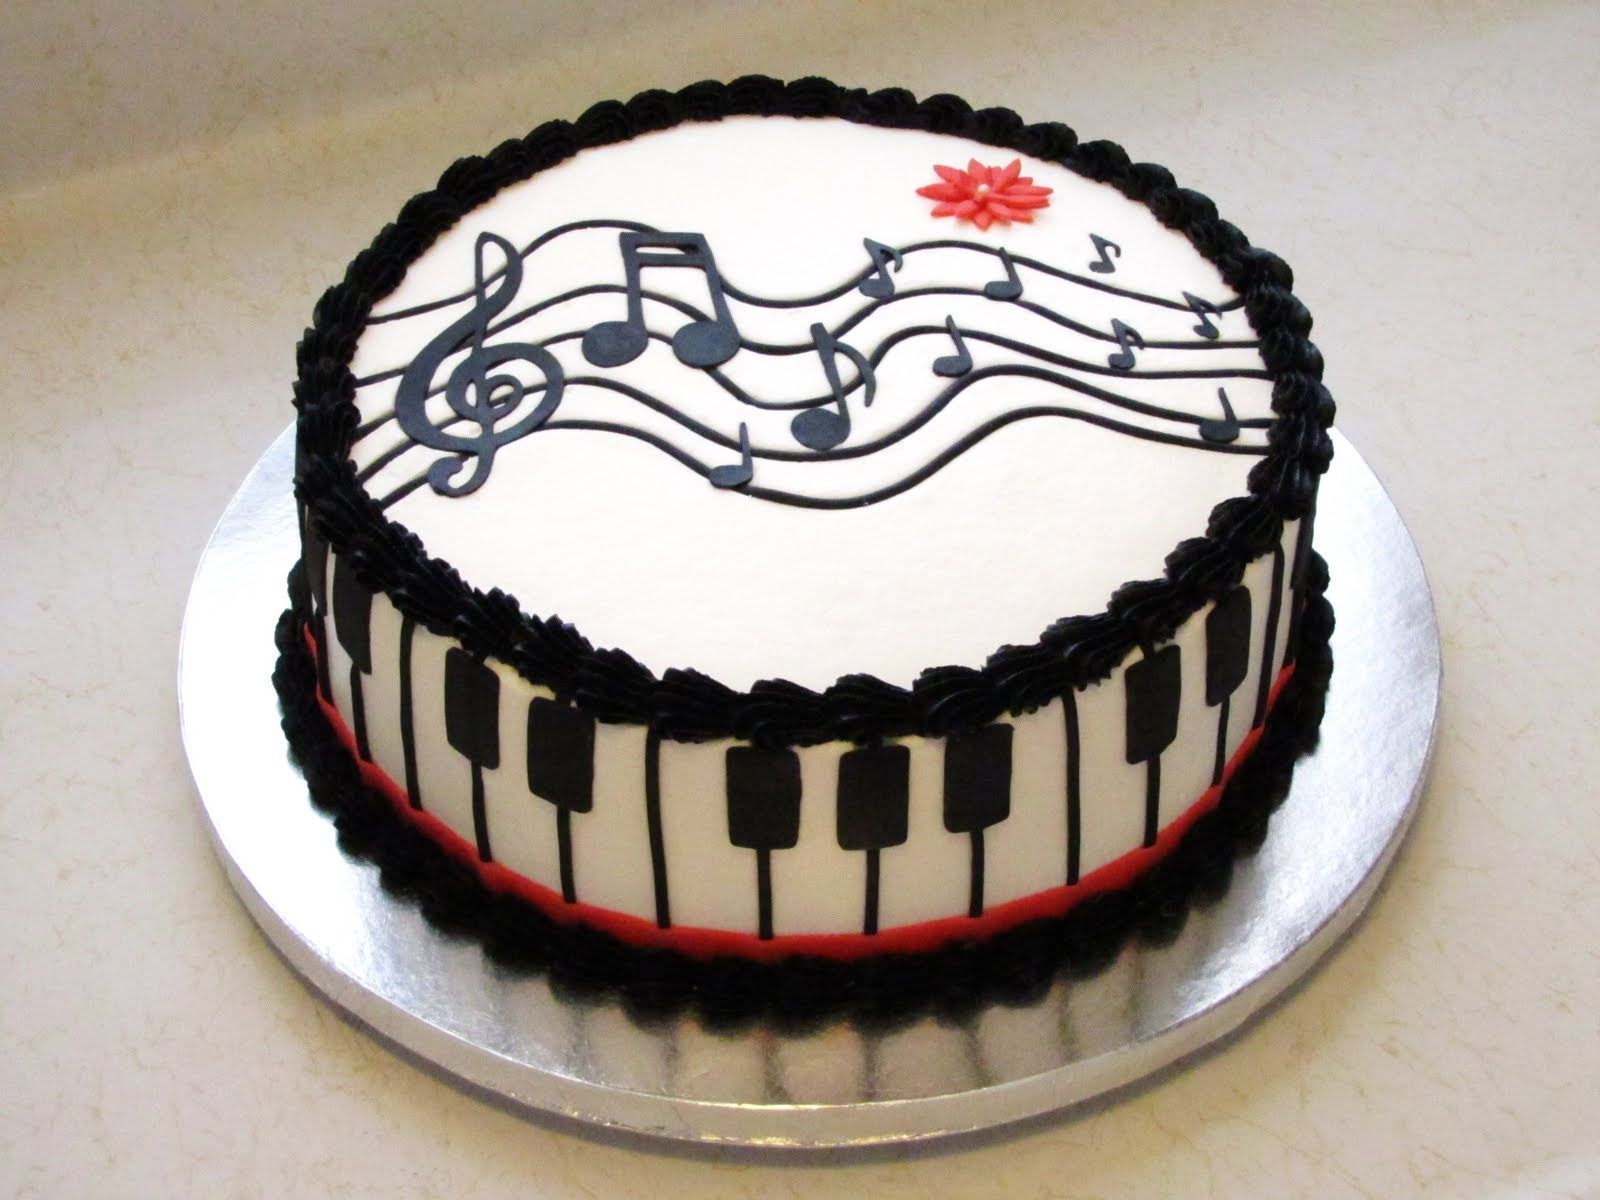 14 cake Birthday music ideas